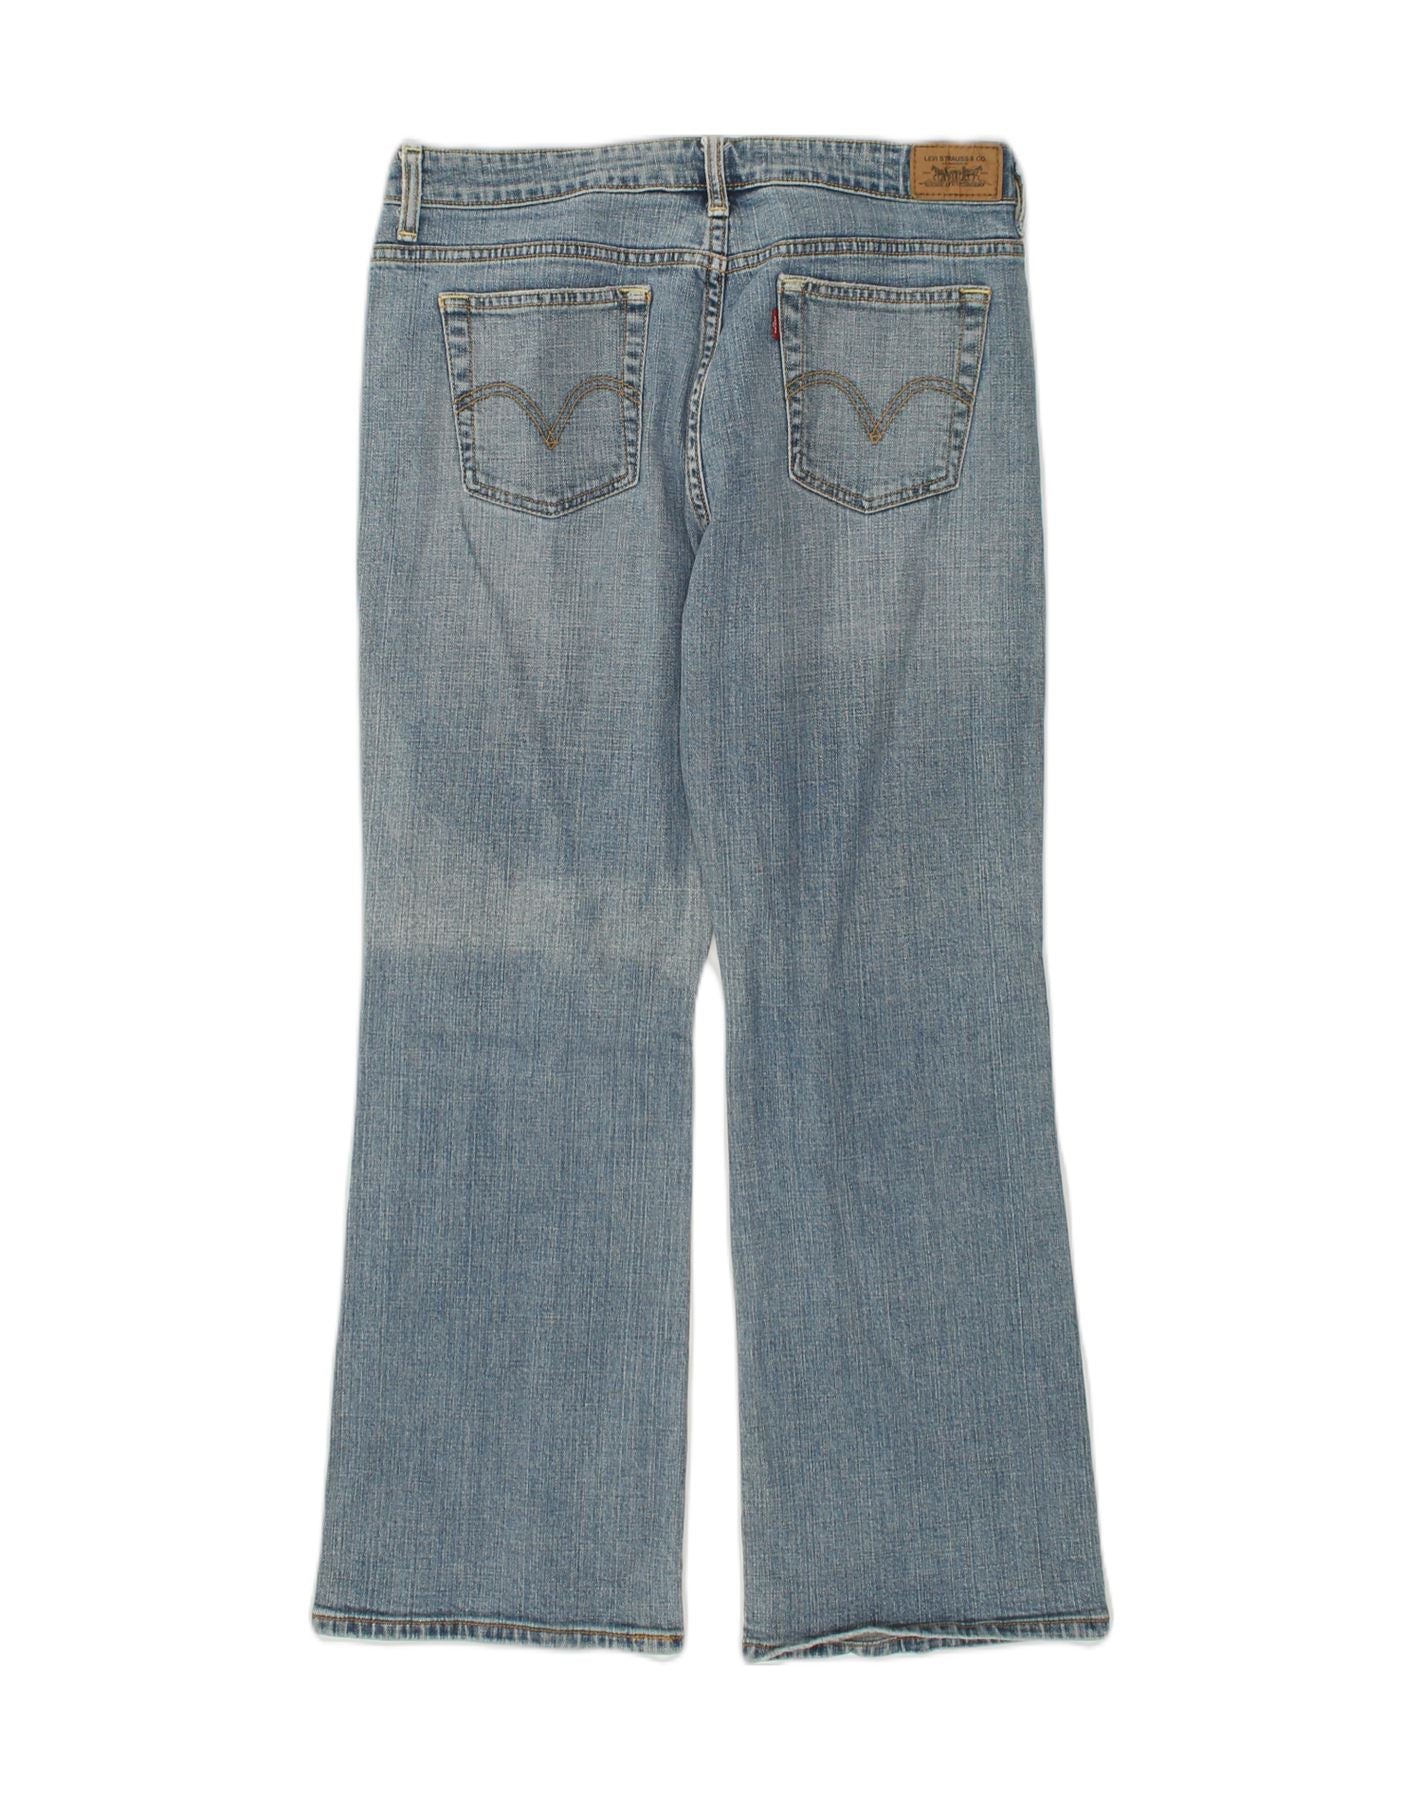 CARHARTT Womens Regular Slim Fit Skinny Jeans US 14 XL W36 L30 Blue Cotton, Vintage & Second-Hand Clothing Online